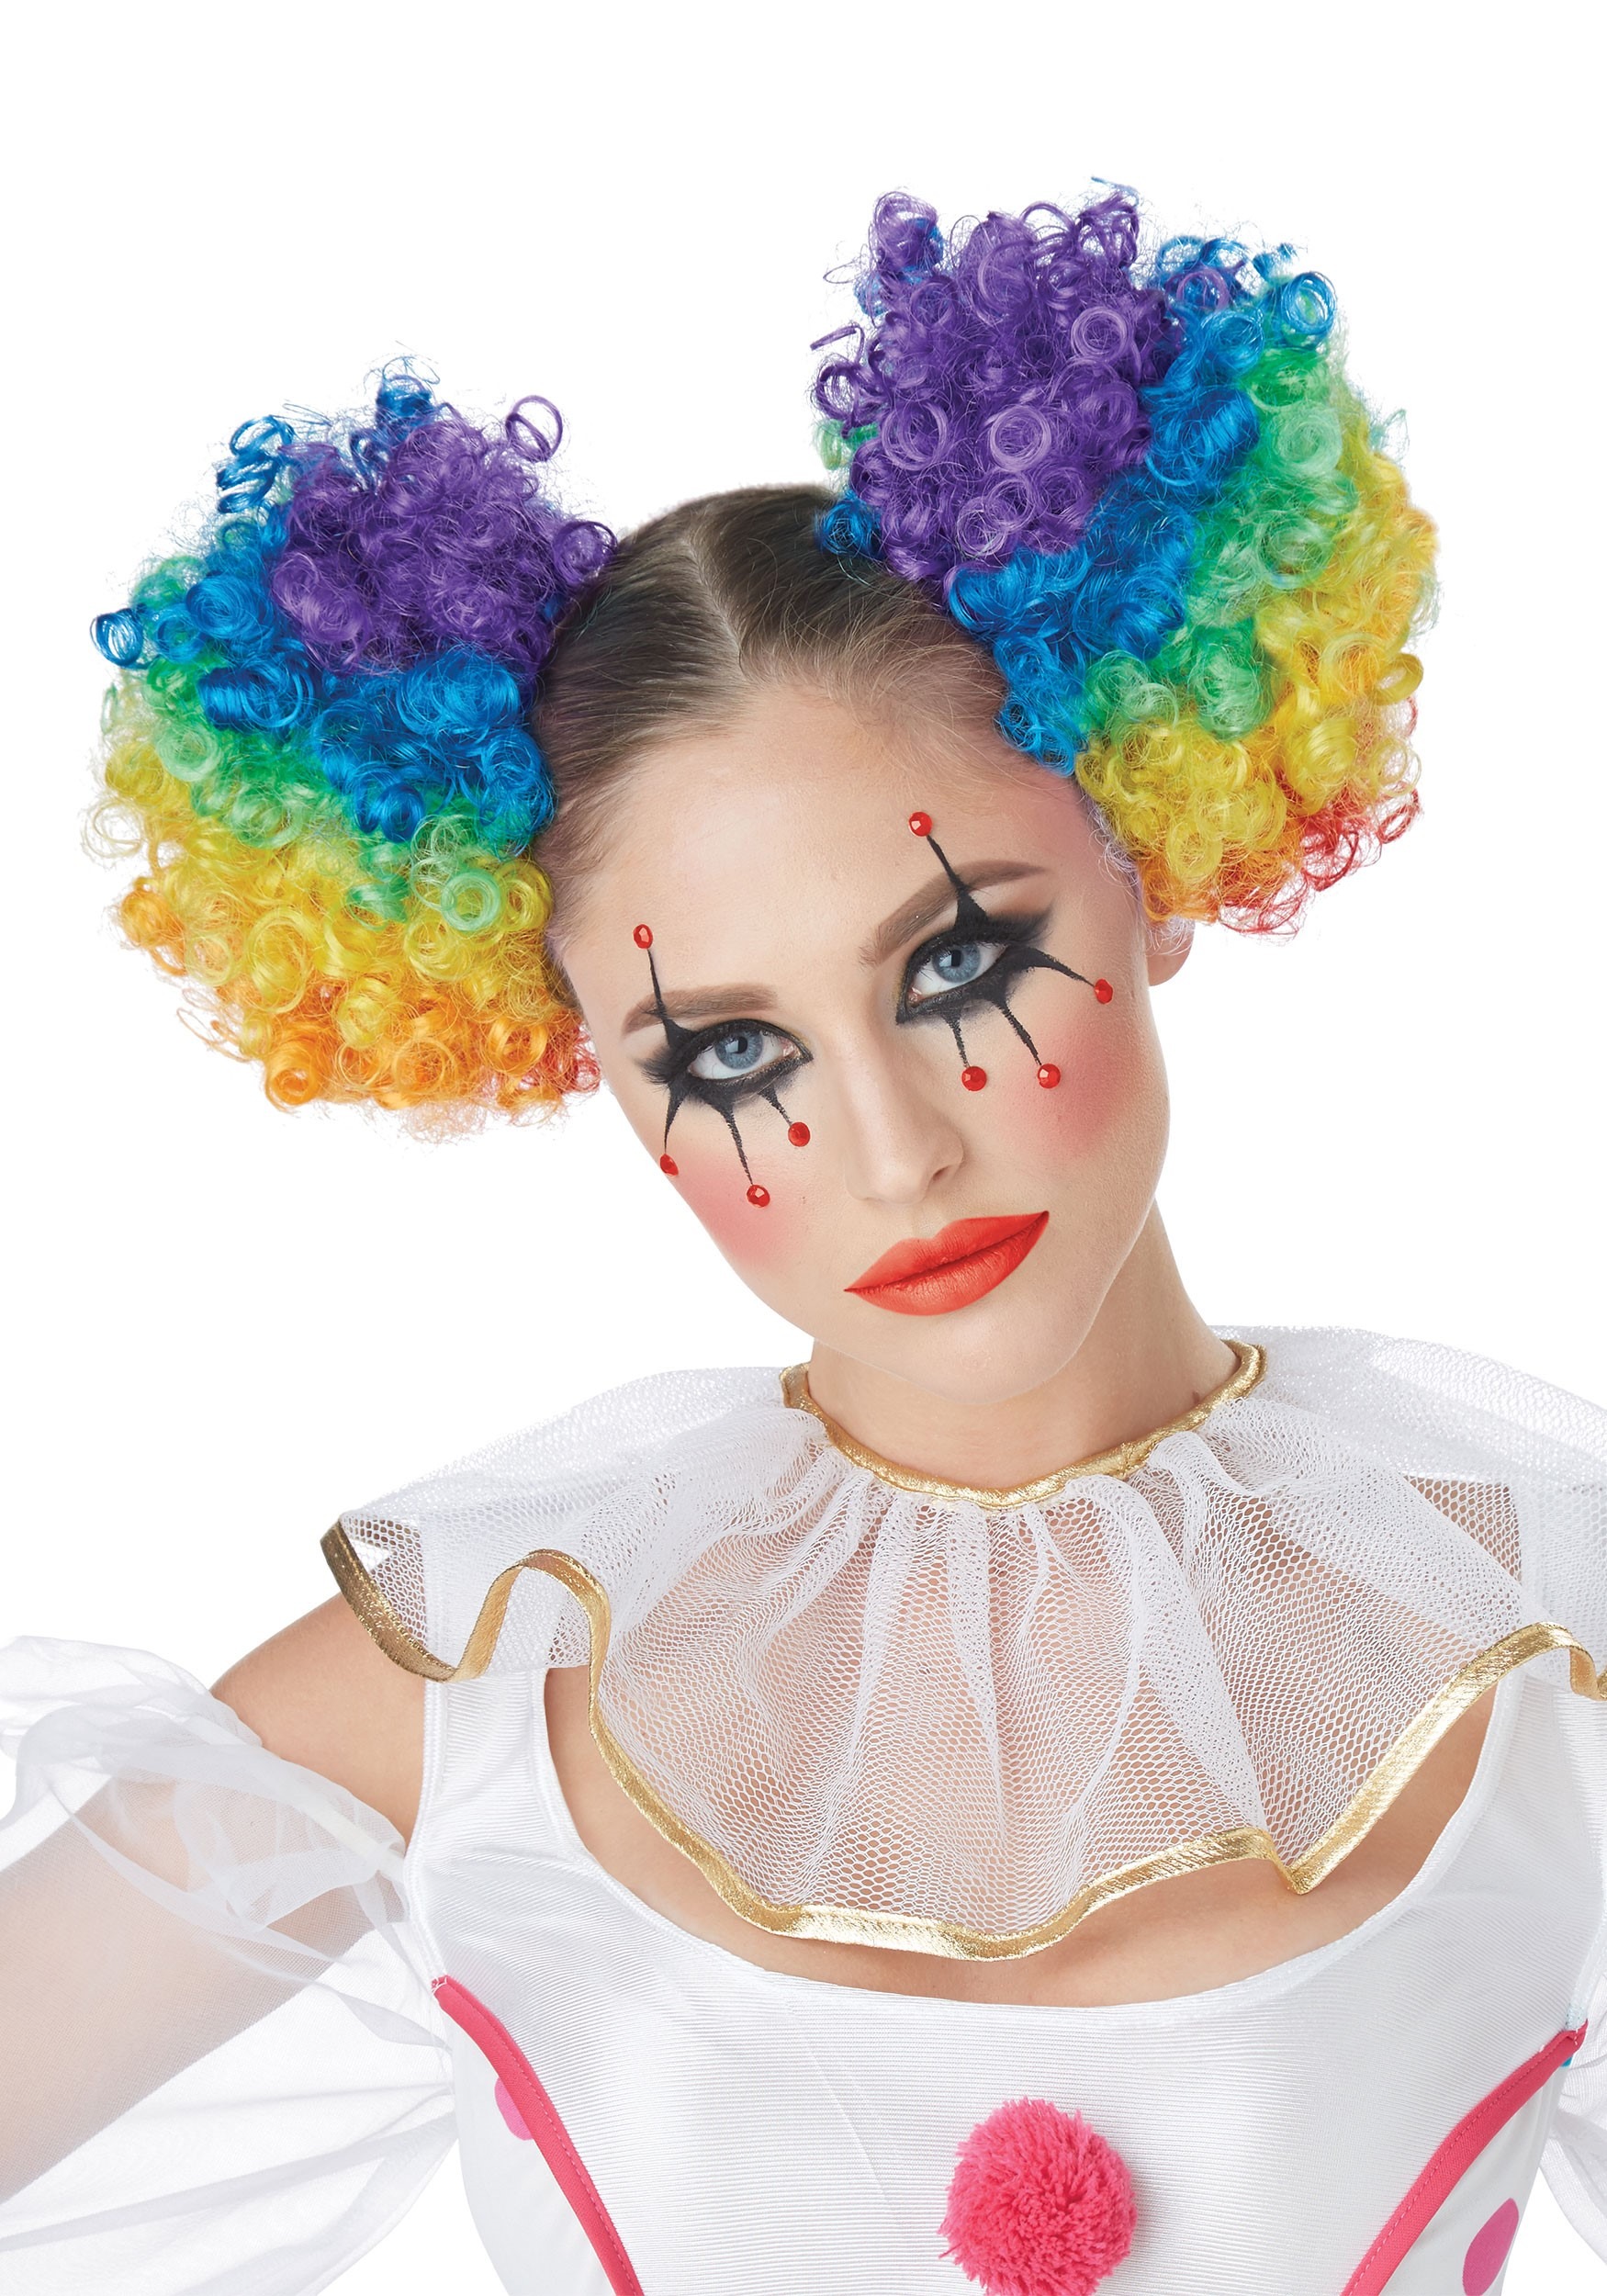 Rainbow Puffs Clown Wig